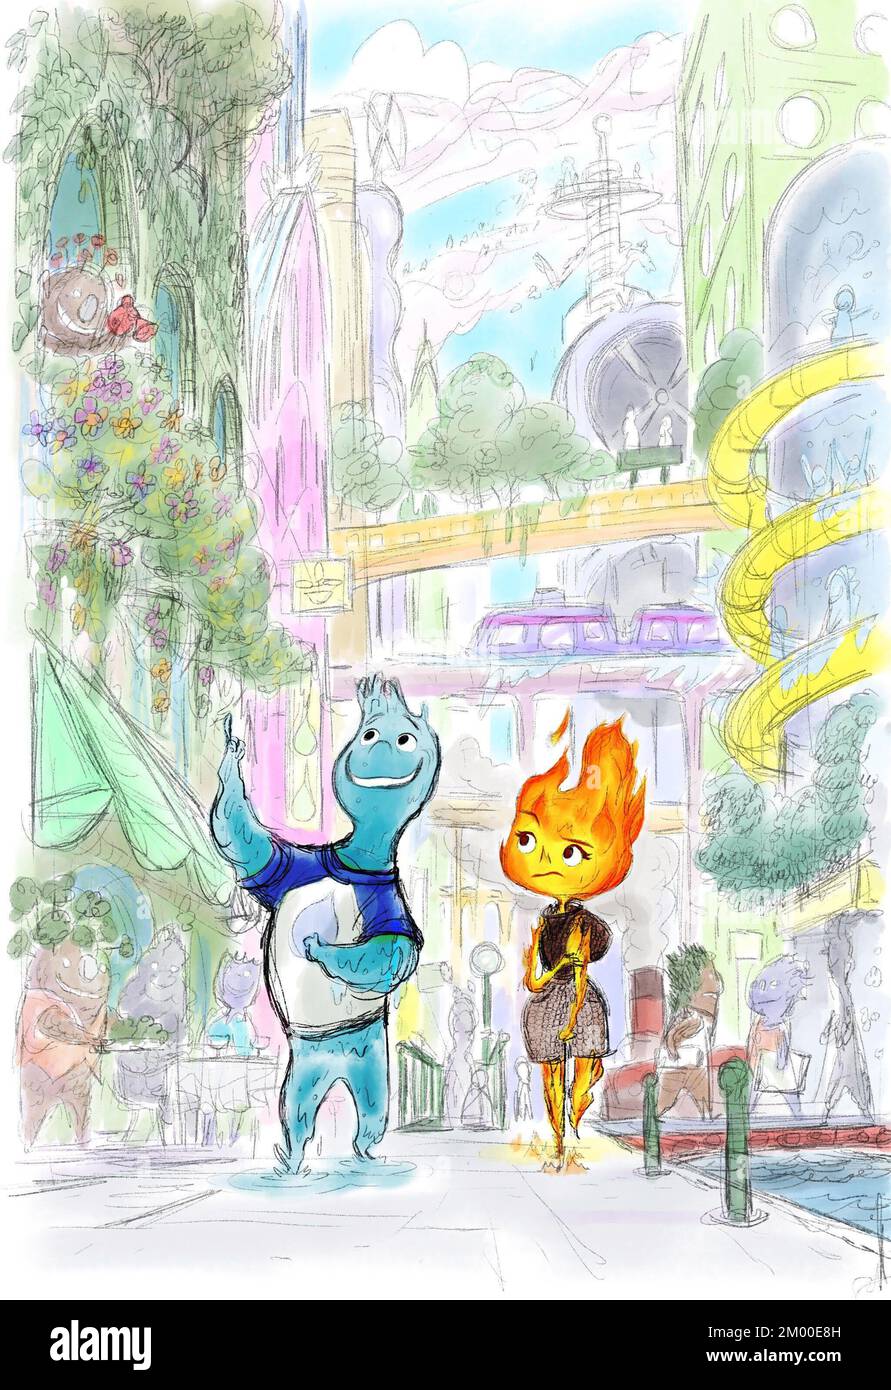 Poster of ELEMENTAL, 2023, directed by PETER SOHN. Copyright Pixar  Animation Studios / Walt Disney Pictures. - Album alb9816225